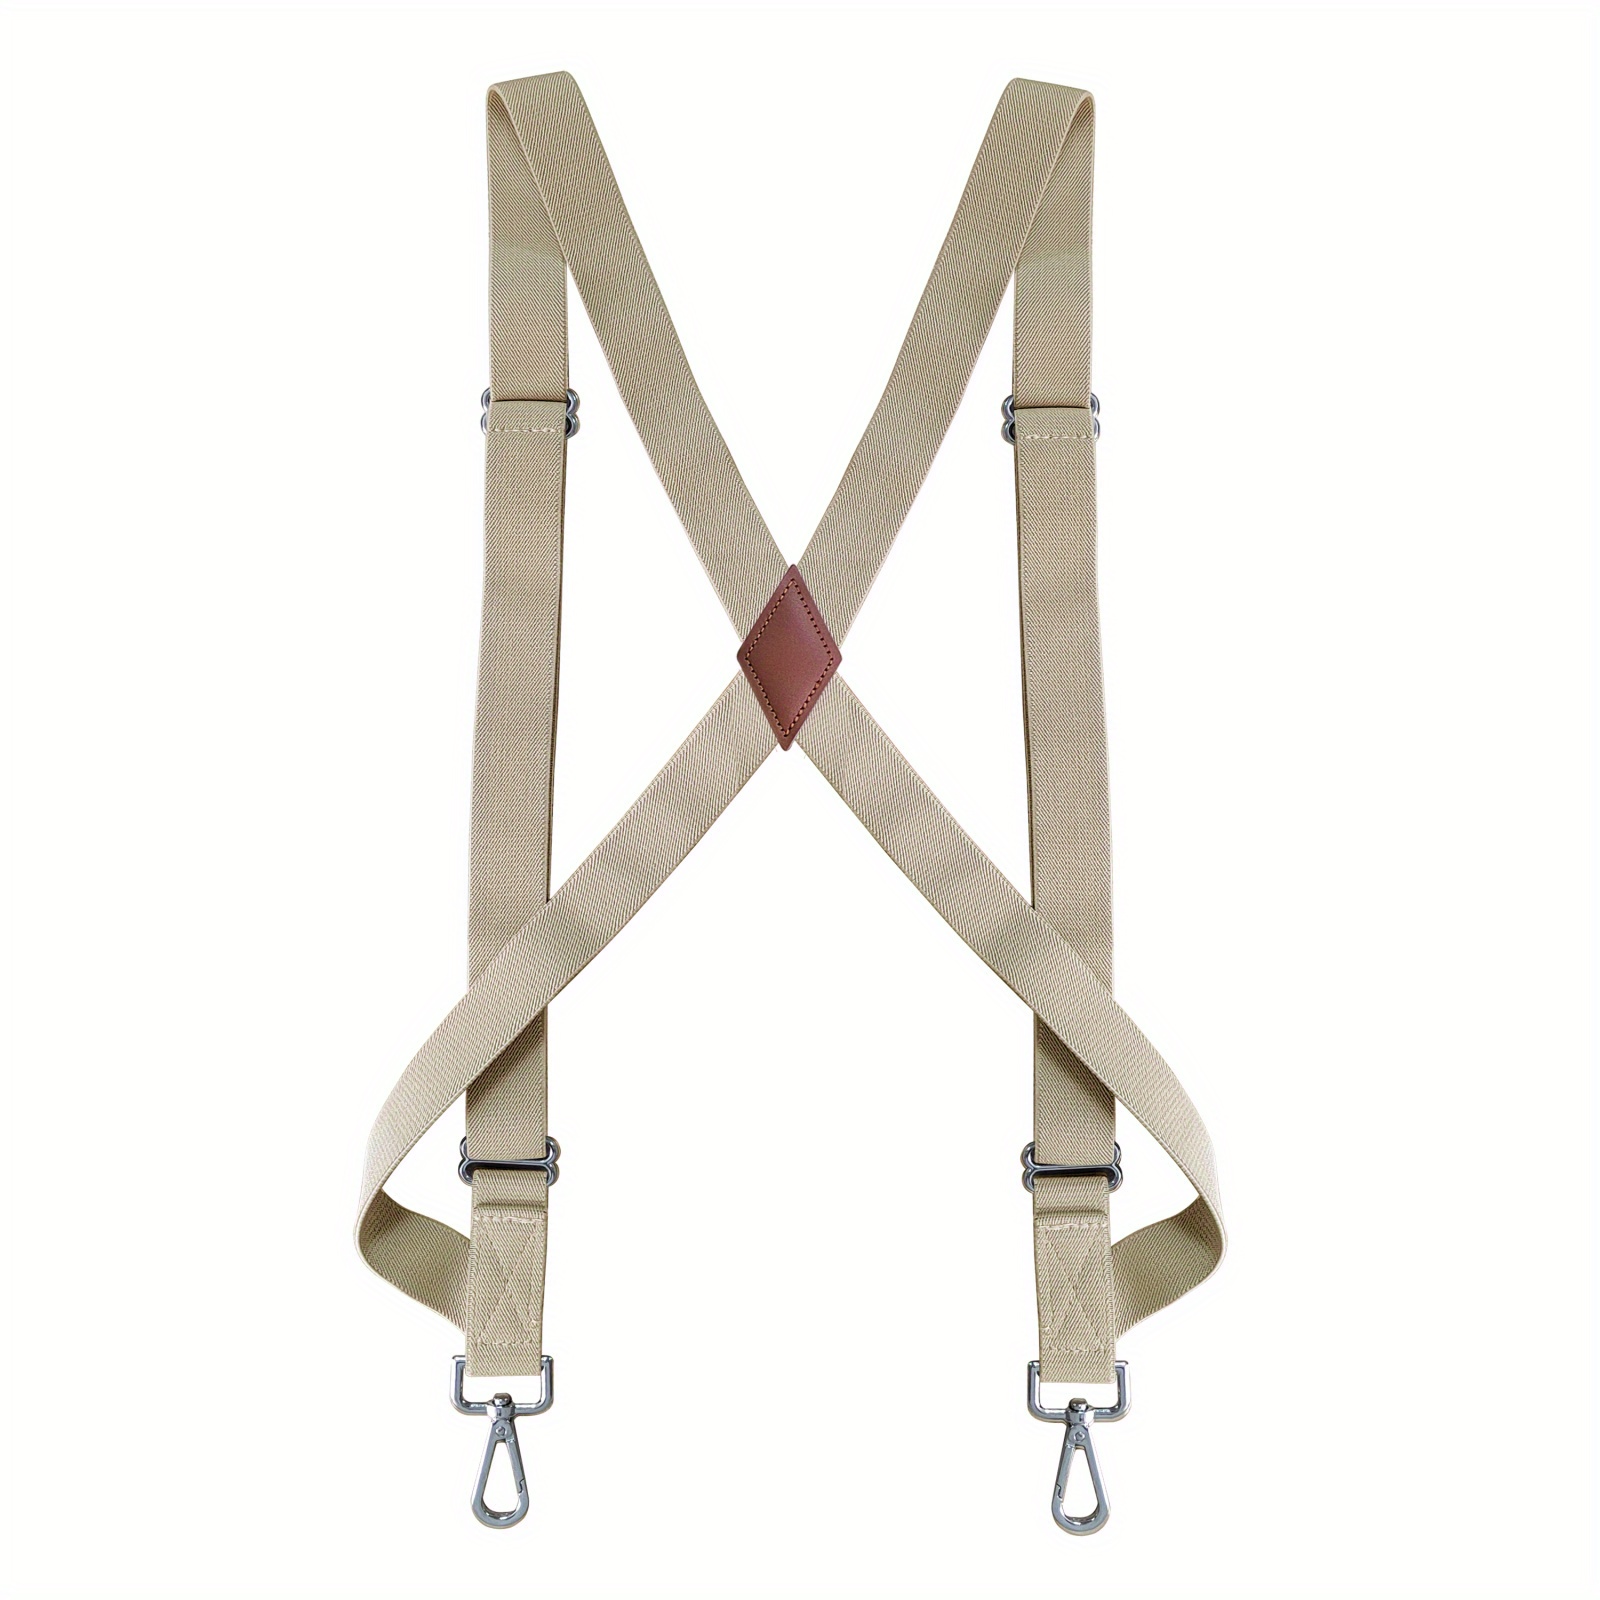 Suspenders for Men Heavy Duty Clips Elastic Adjustable Straps Vintage X Back